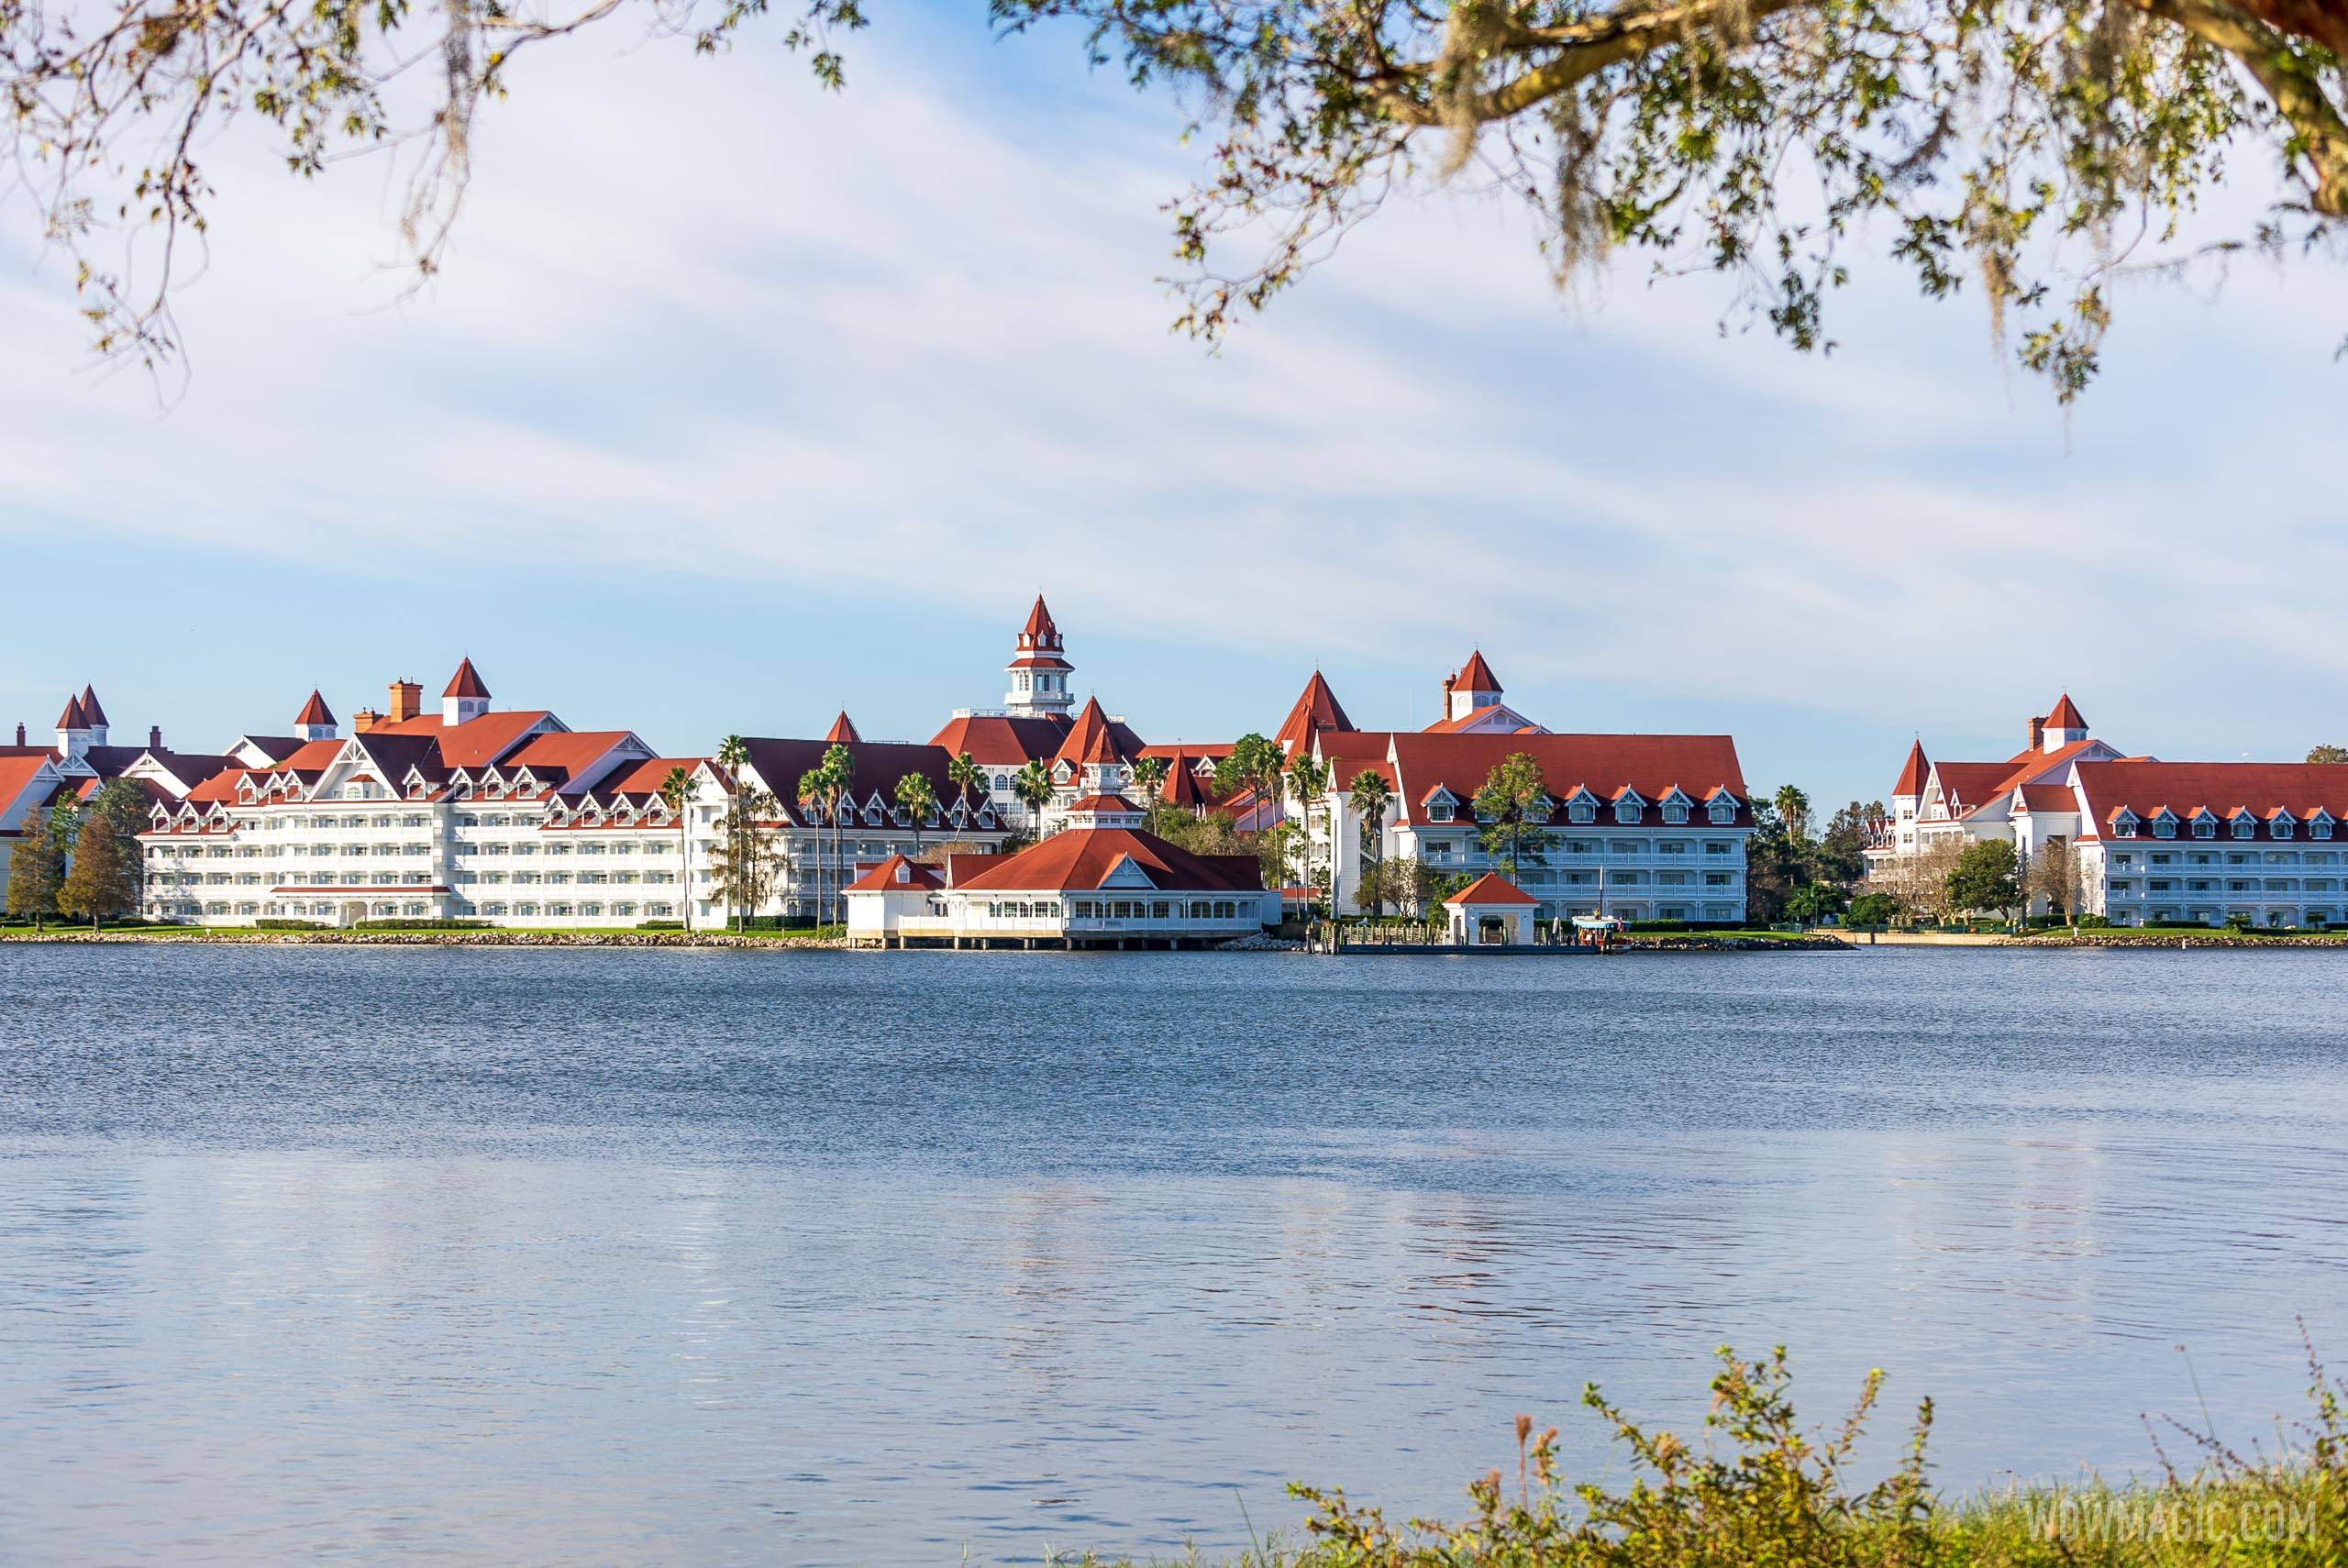 New Walt Disney World resort hotel discounts for 2019